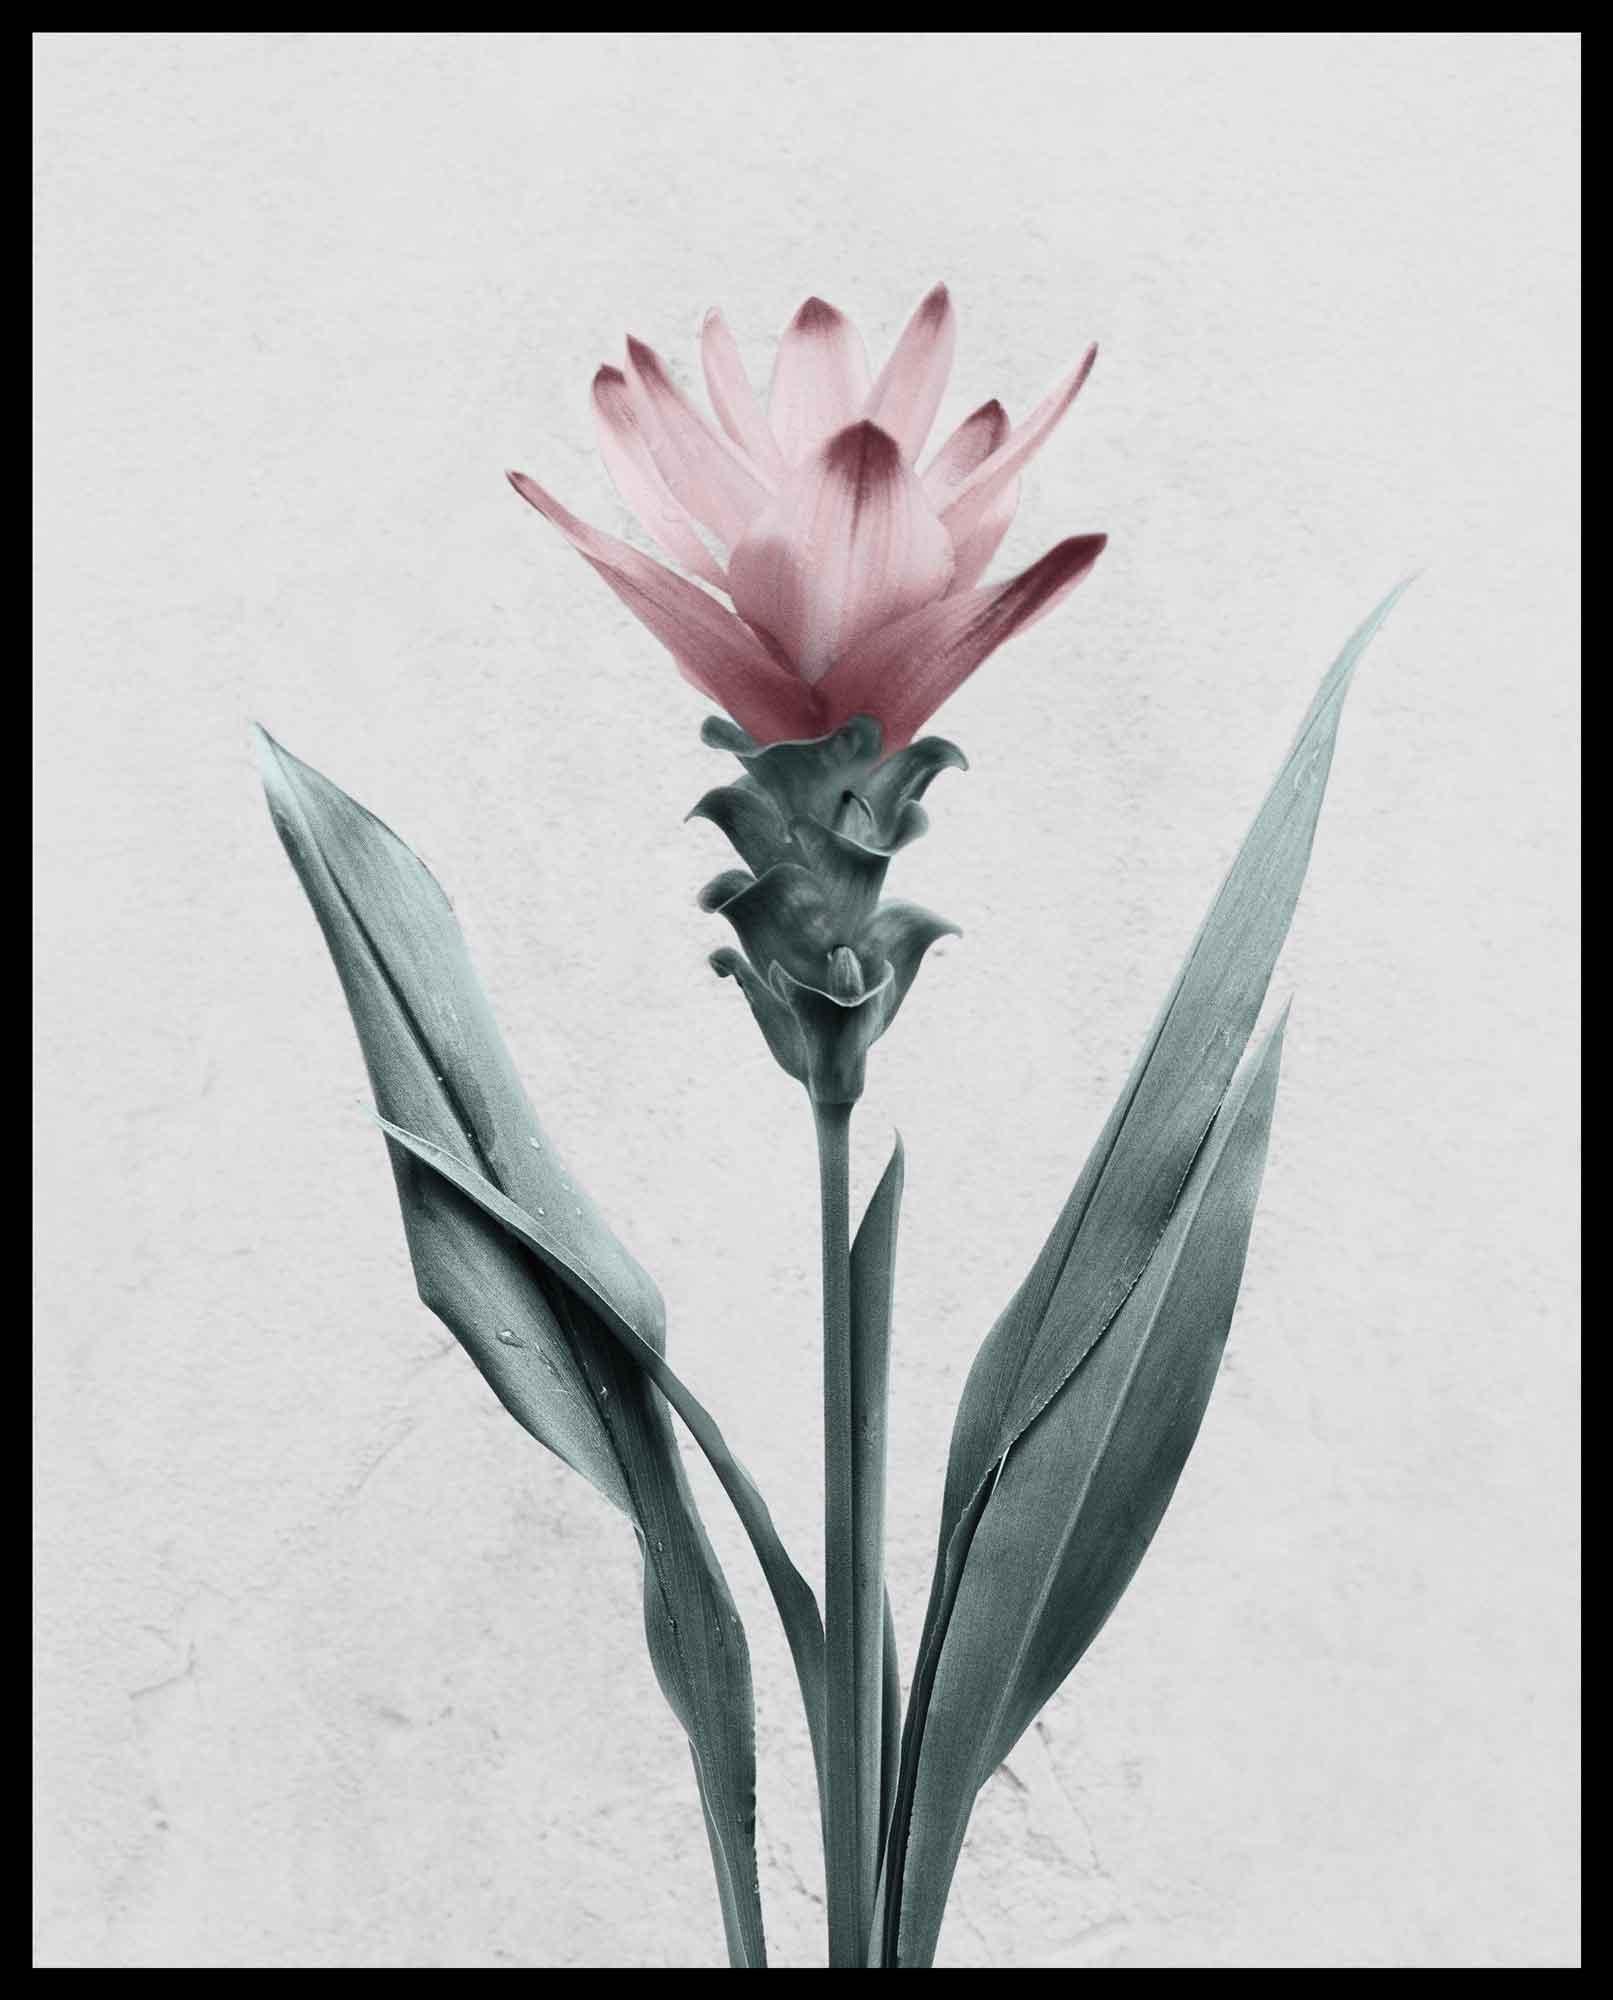 Botanica #26 (Curcuma) - Gray Color Photograph by Vee Speers